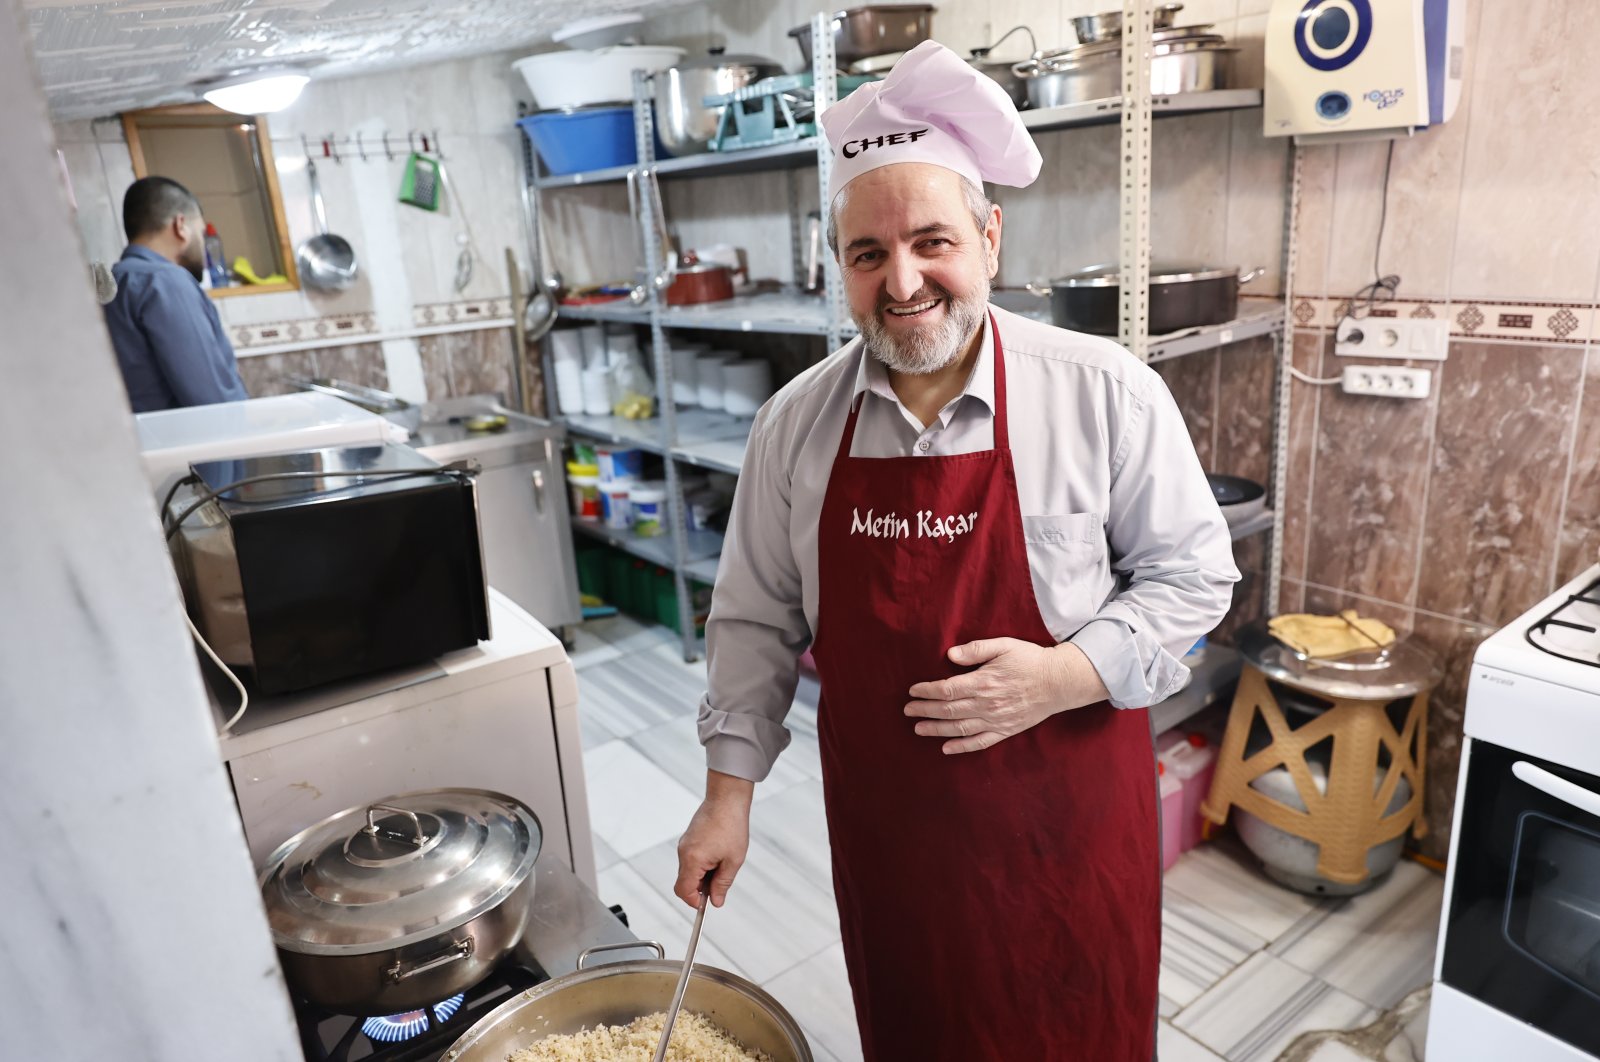 Imam Metin Kaçar smiles as he cooks in the kitchen of Hürrem Çavuş Mosque in Istanbul, Jan. 23, 2023. (AA Photo)